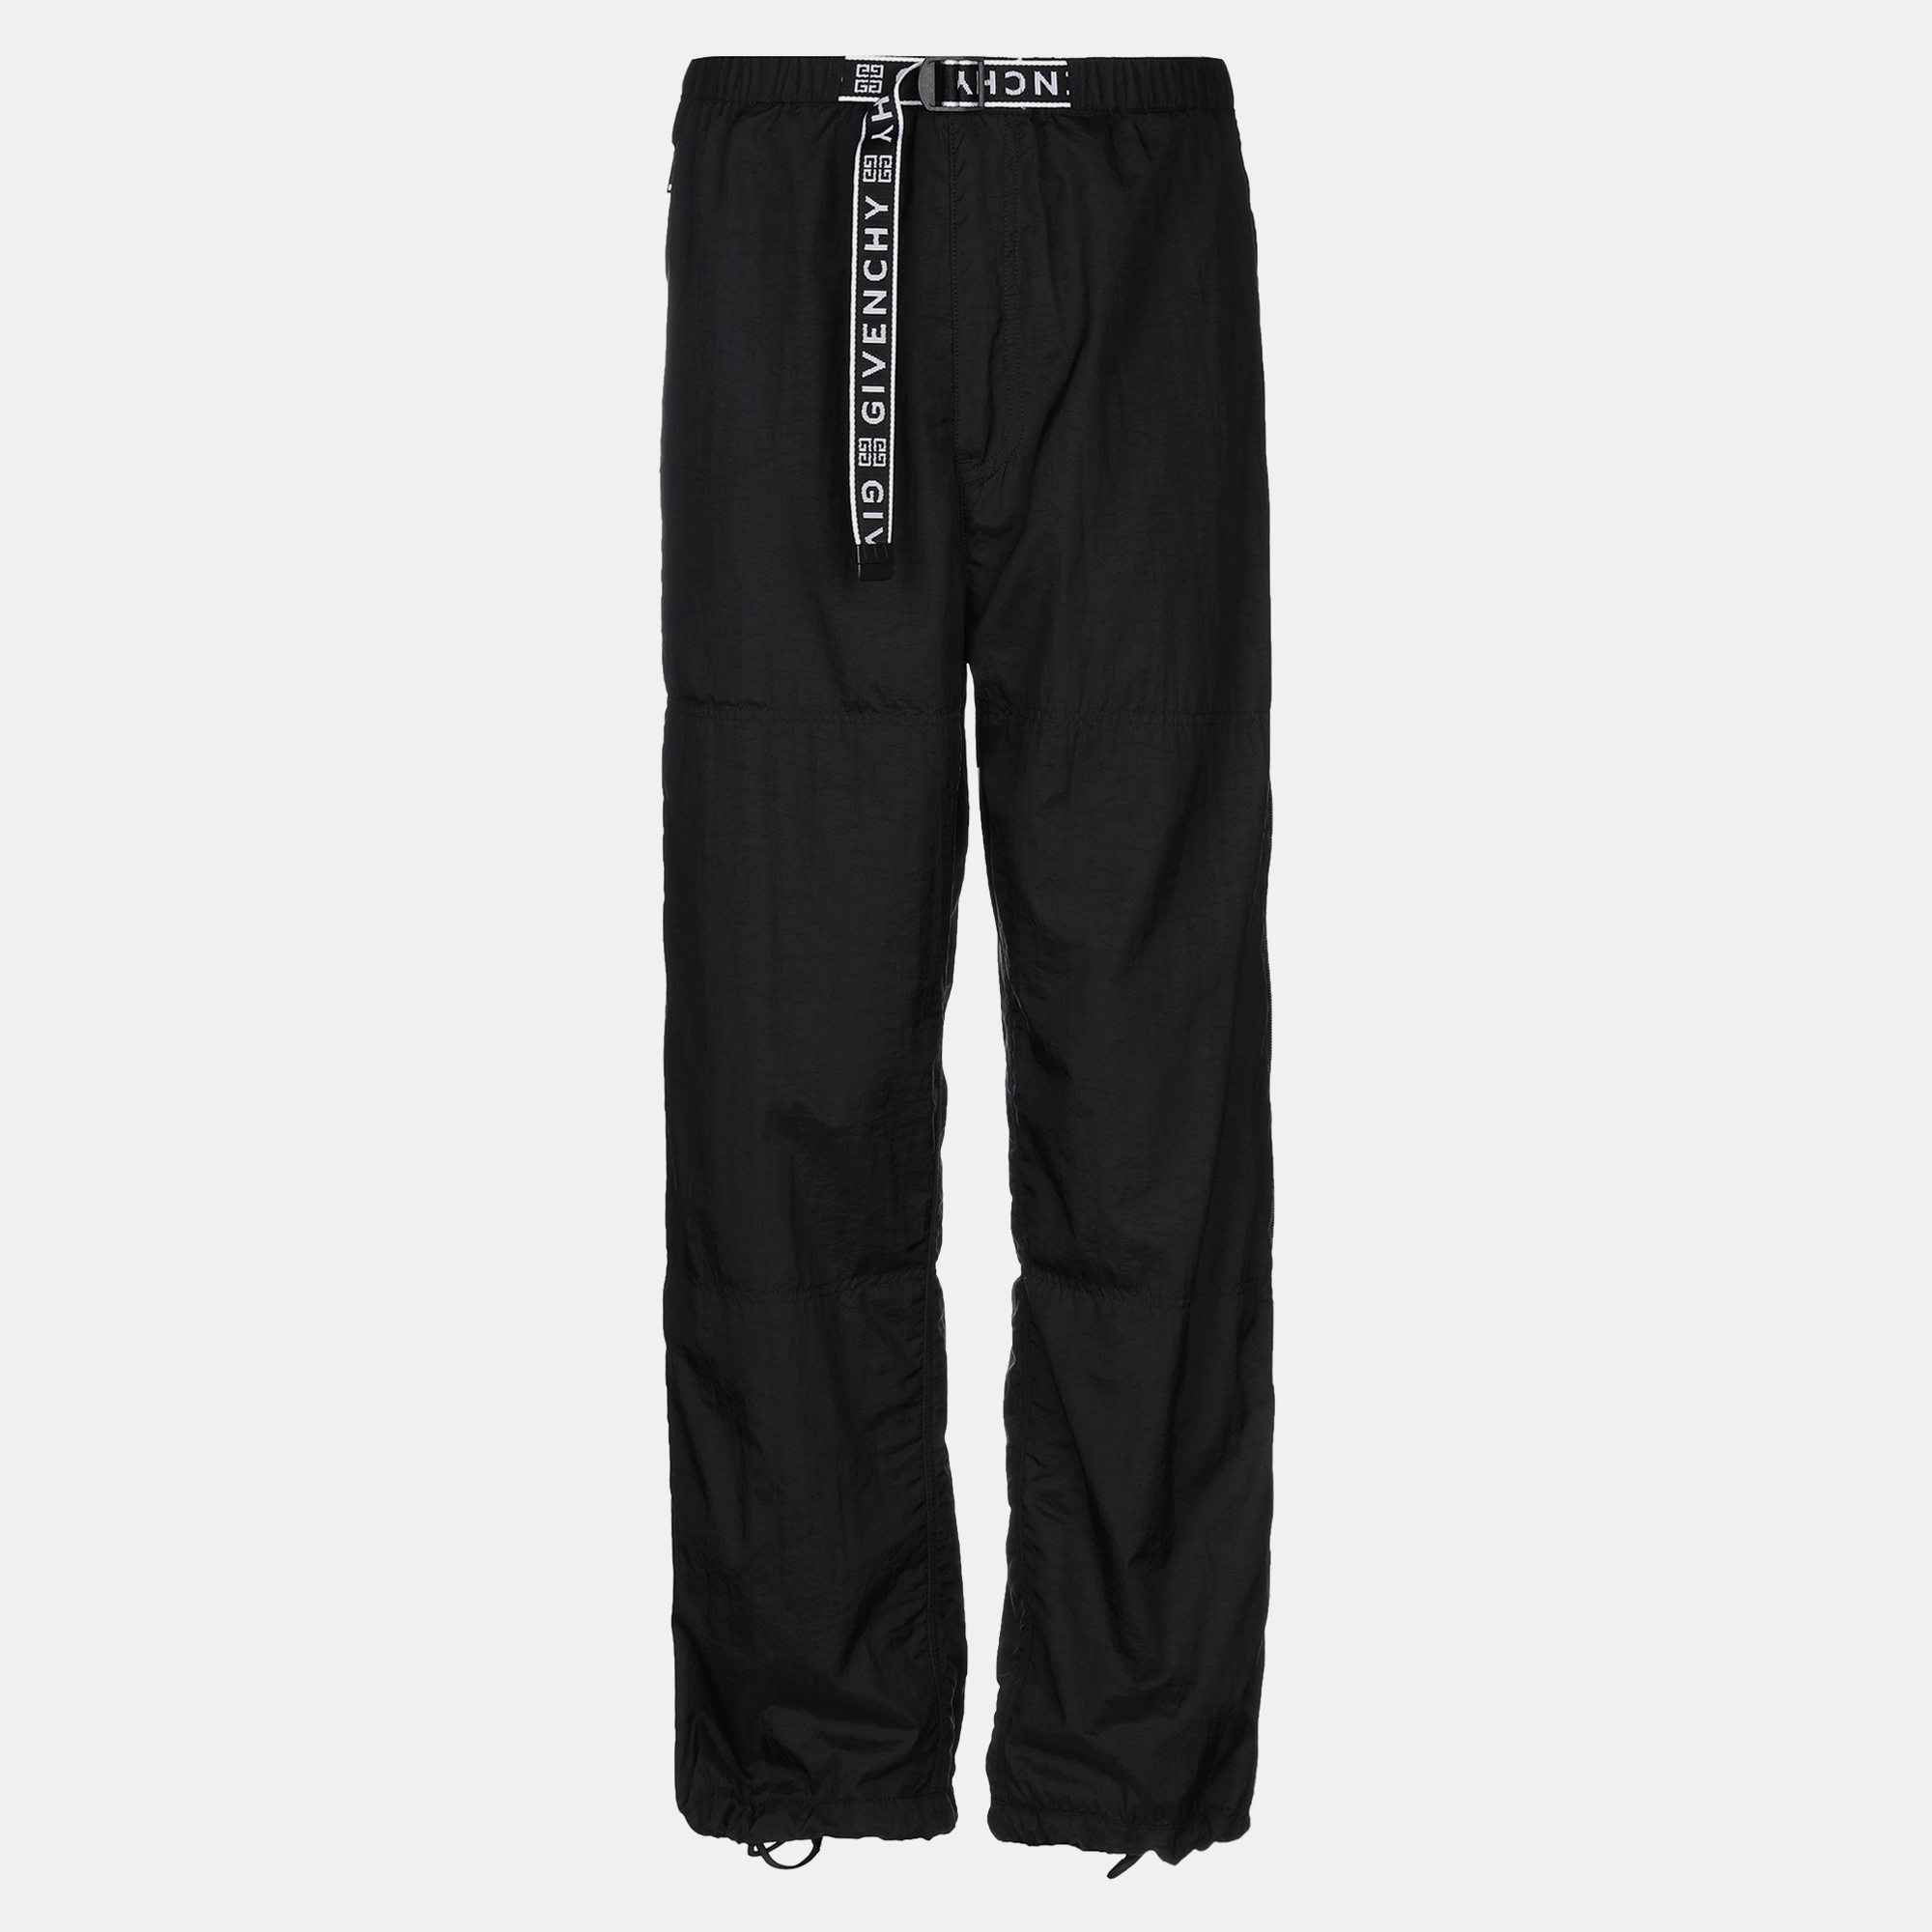 Givenchy black polyamide elasticized waist trousers s (it 46)